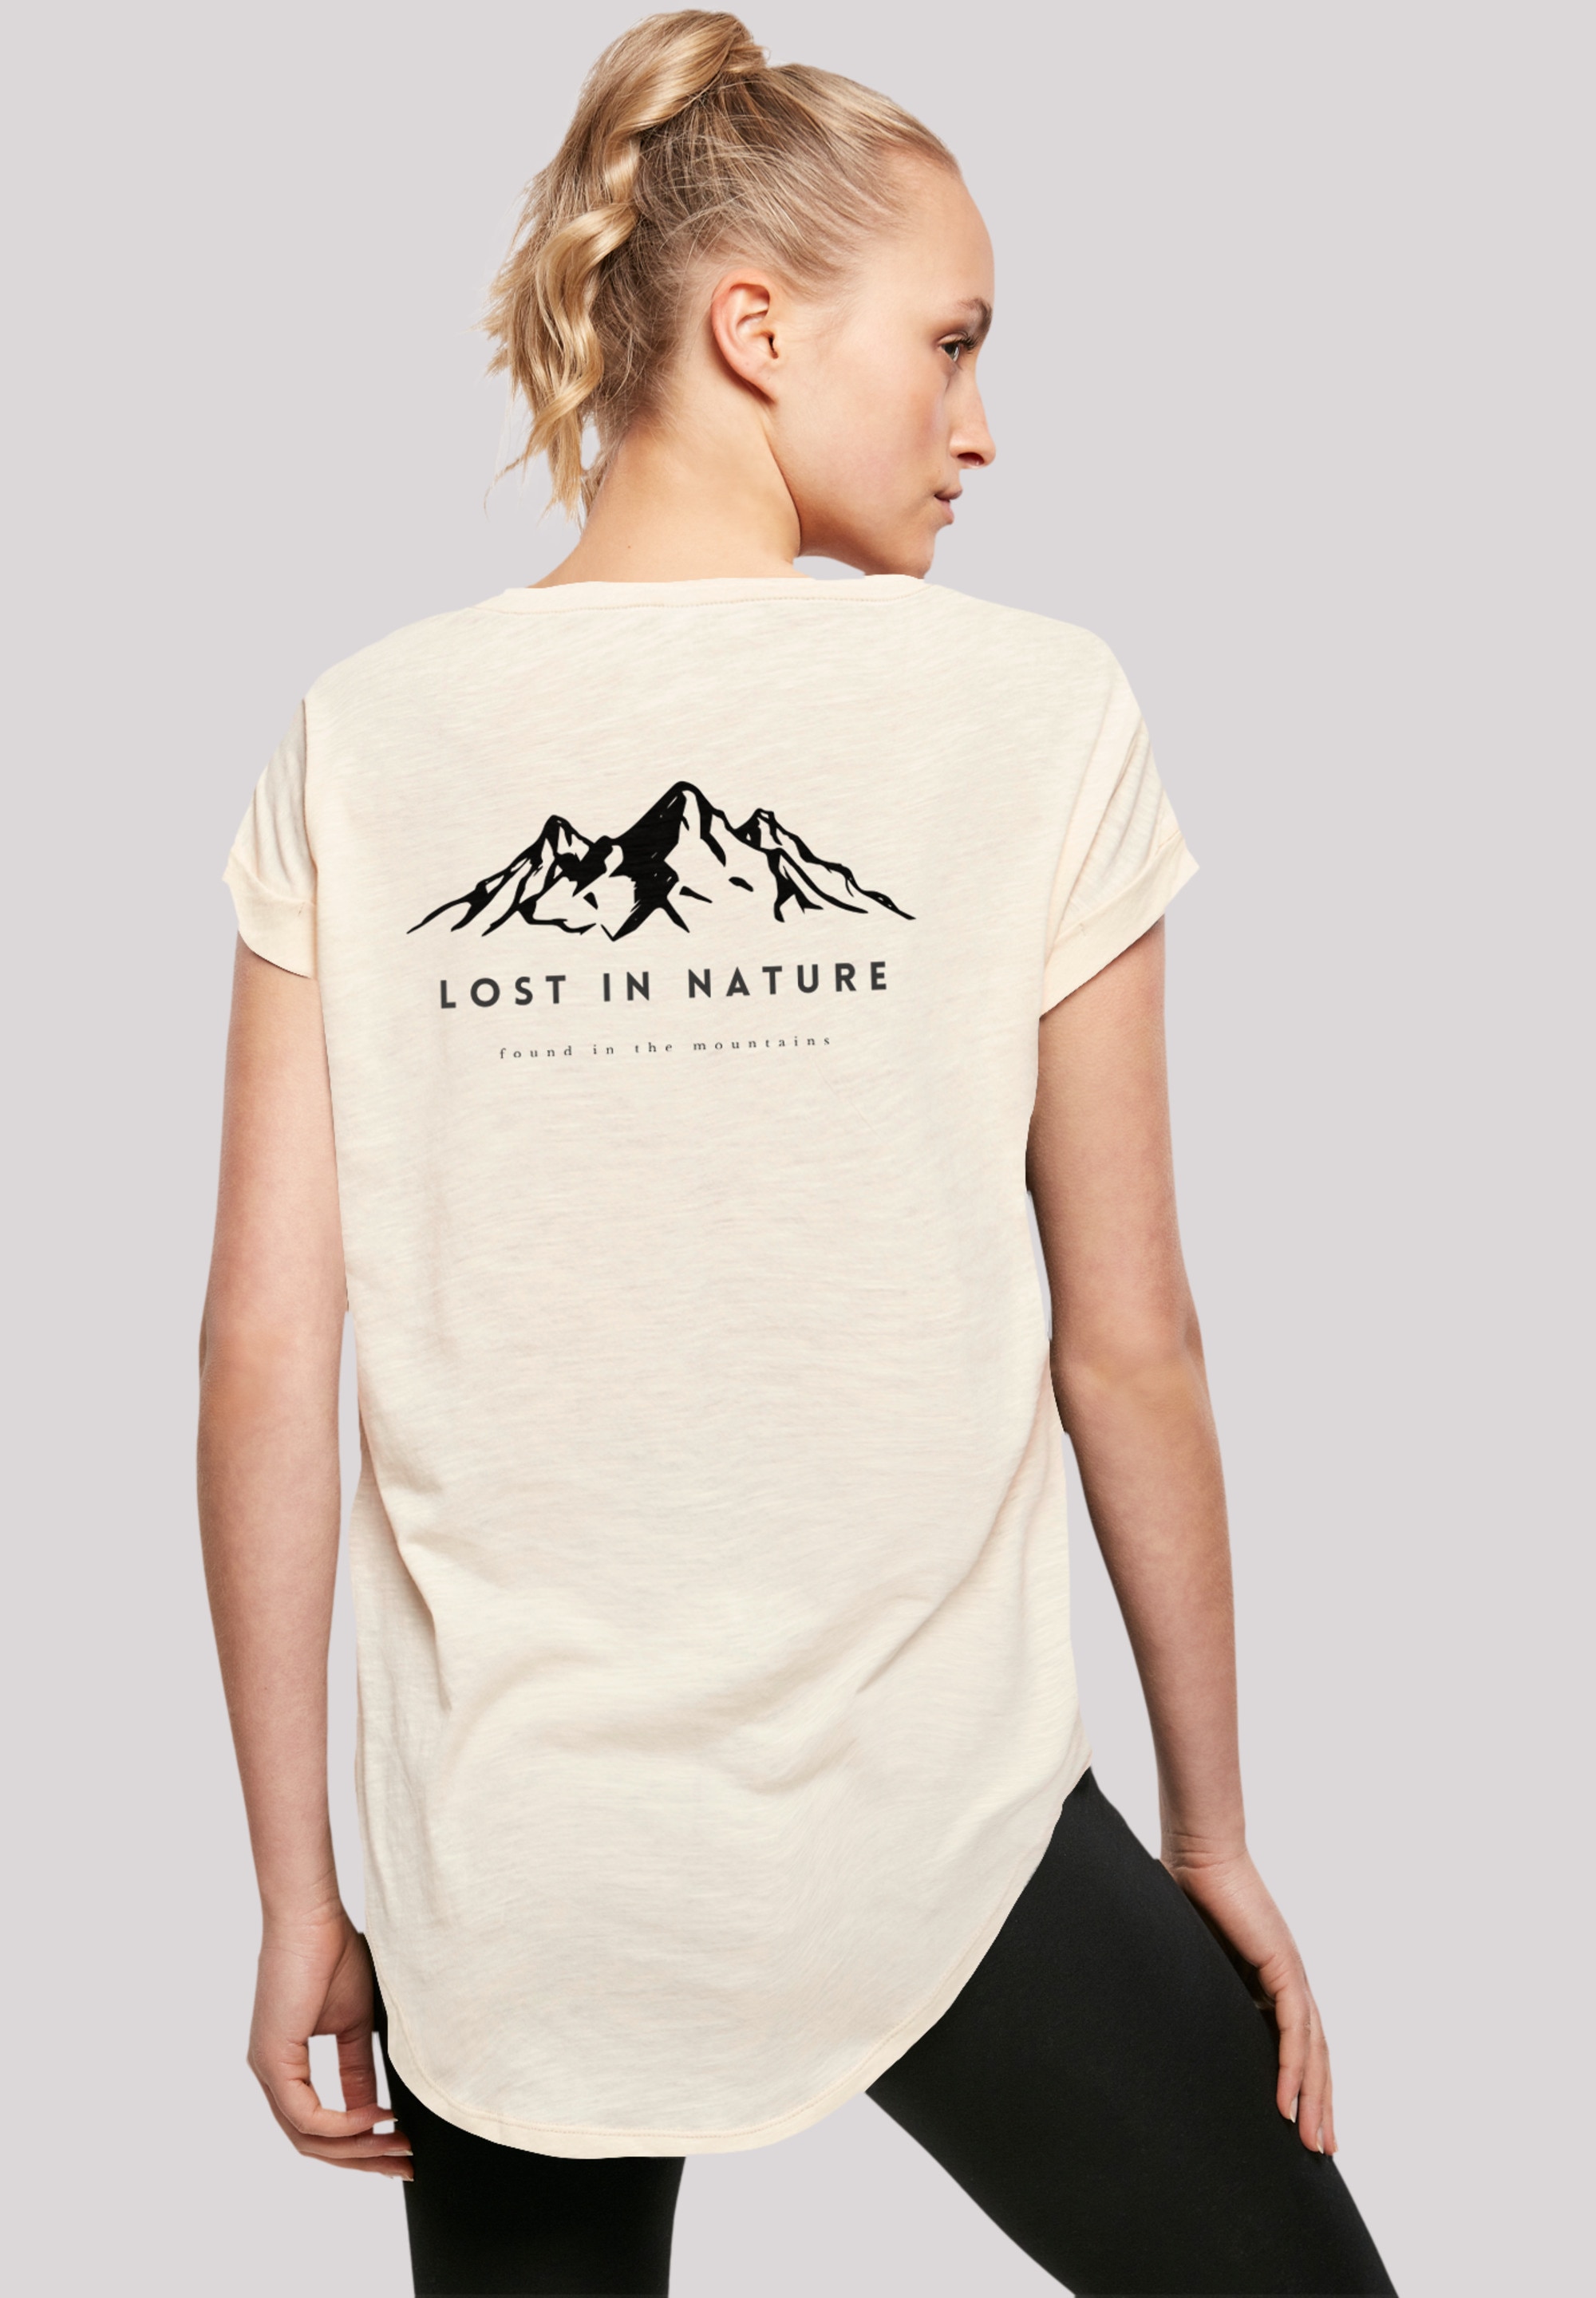 F4NT4STIC Print T-Shirt walking online | in »Lost kaufen nature«, I\'m